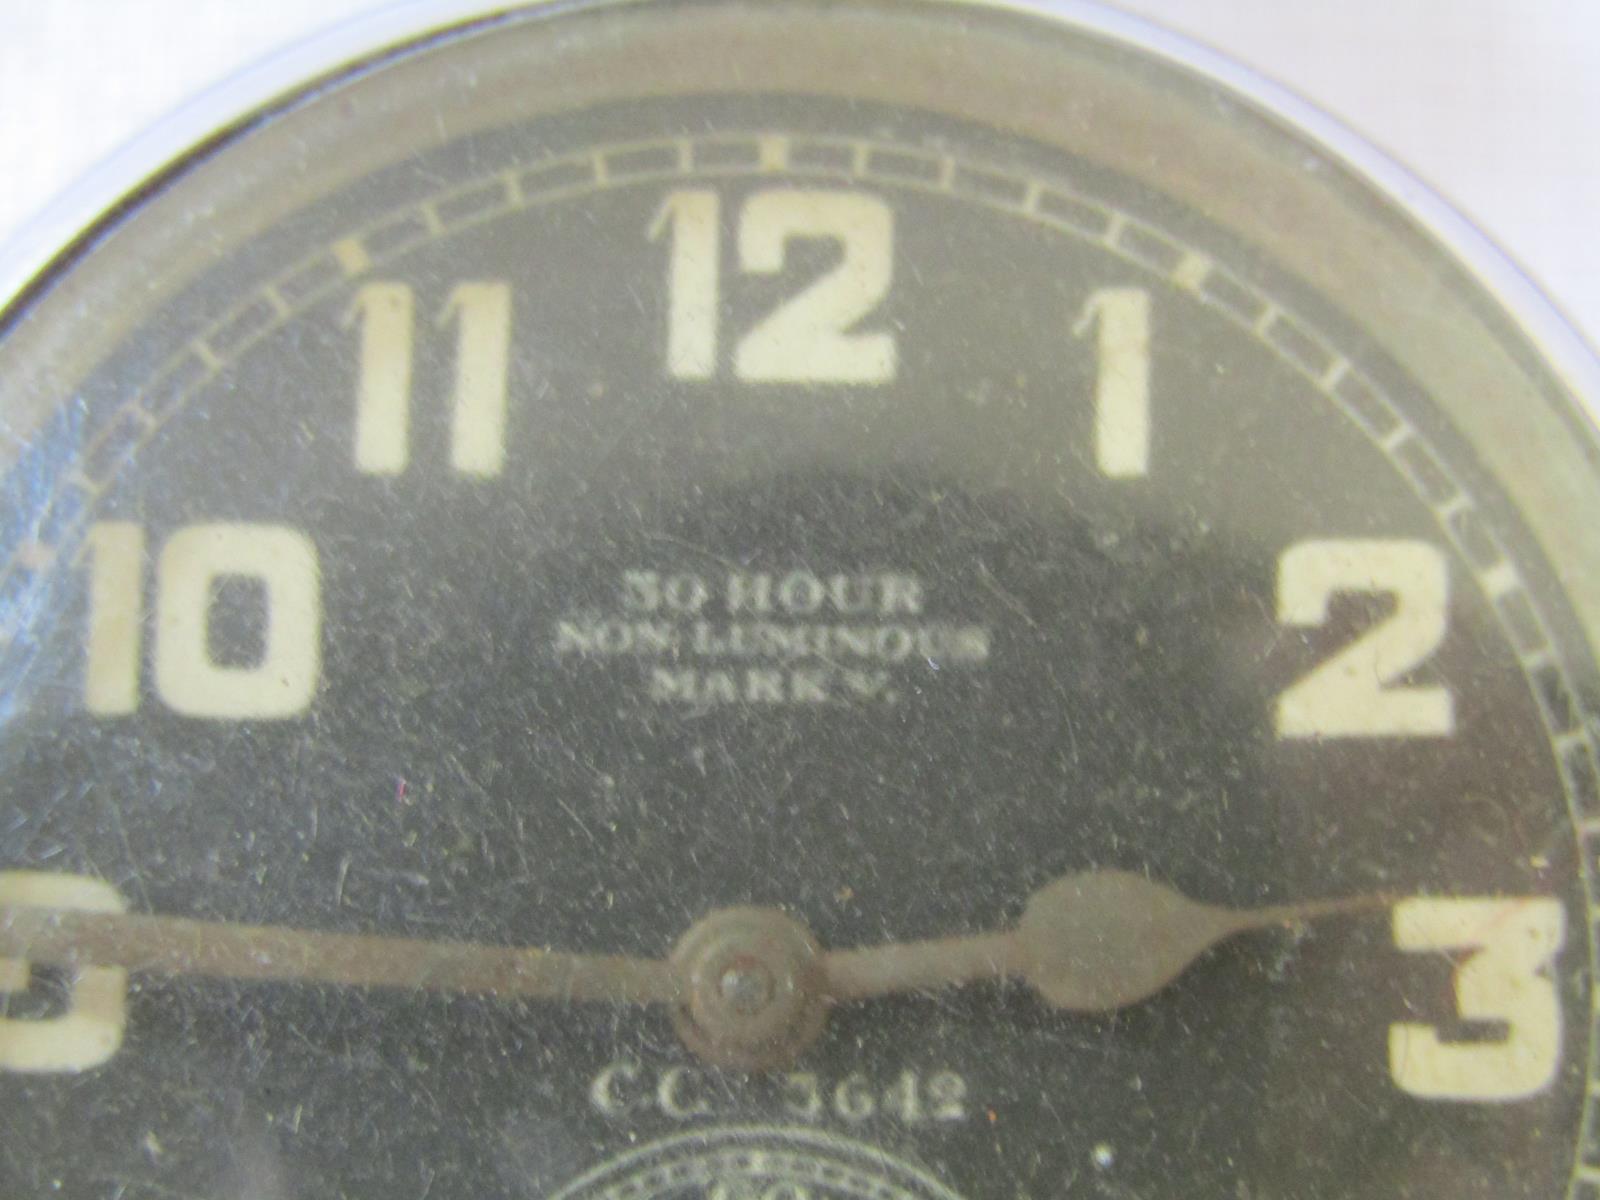 1916 RFC 30 hour non-luminous Mark.V  C.C. 3642 cockpit pocket watch short stem with broad arrow - Image 2 of 6